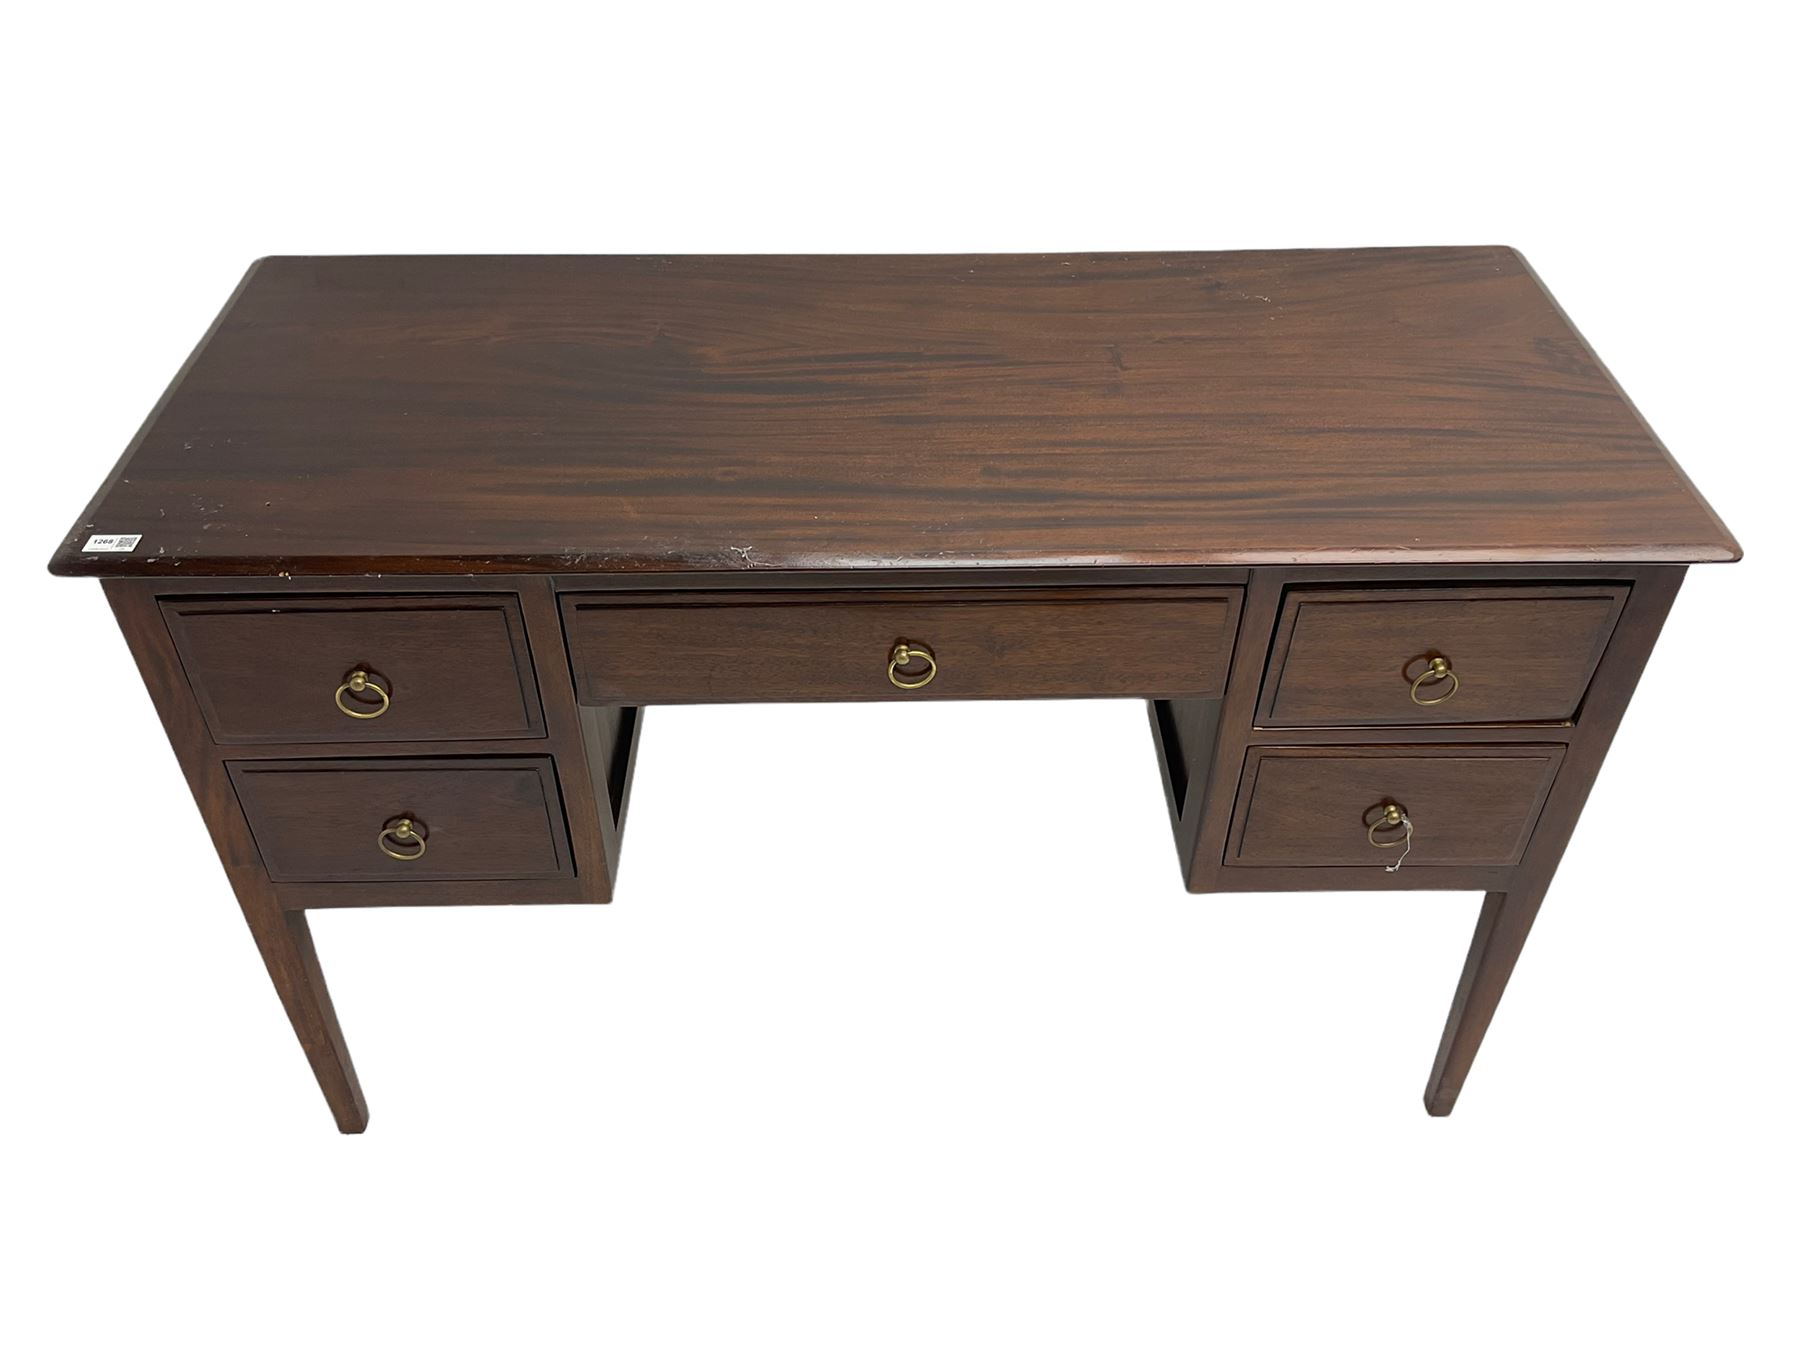 Hardwood kneehole dressing table or desk - Image 5 of 10